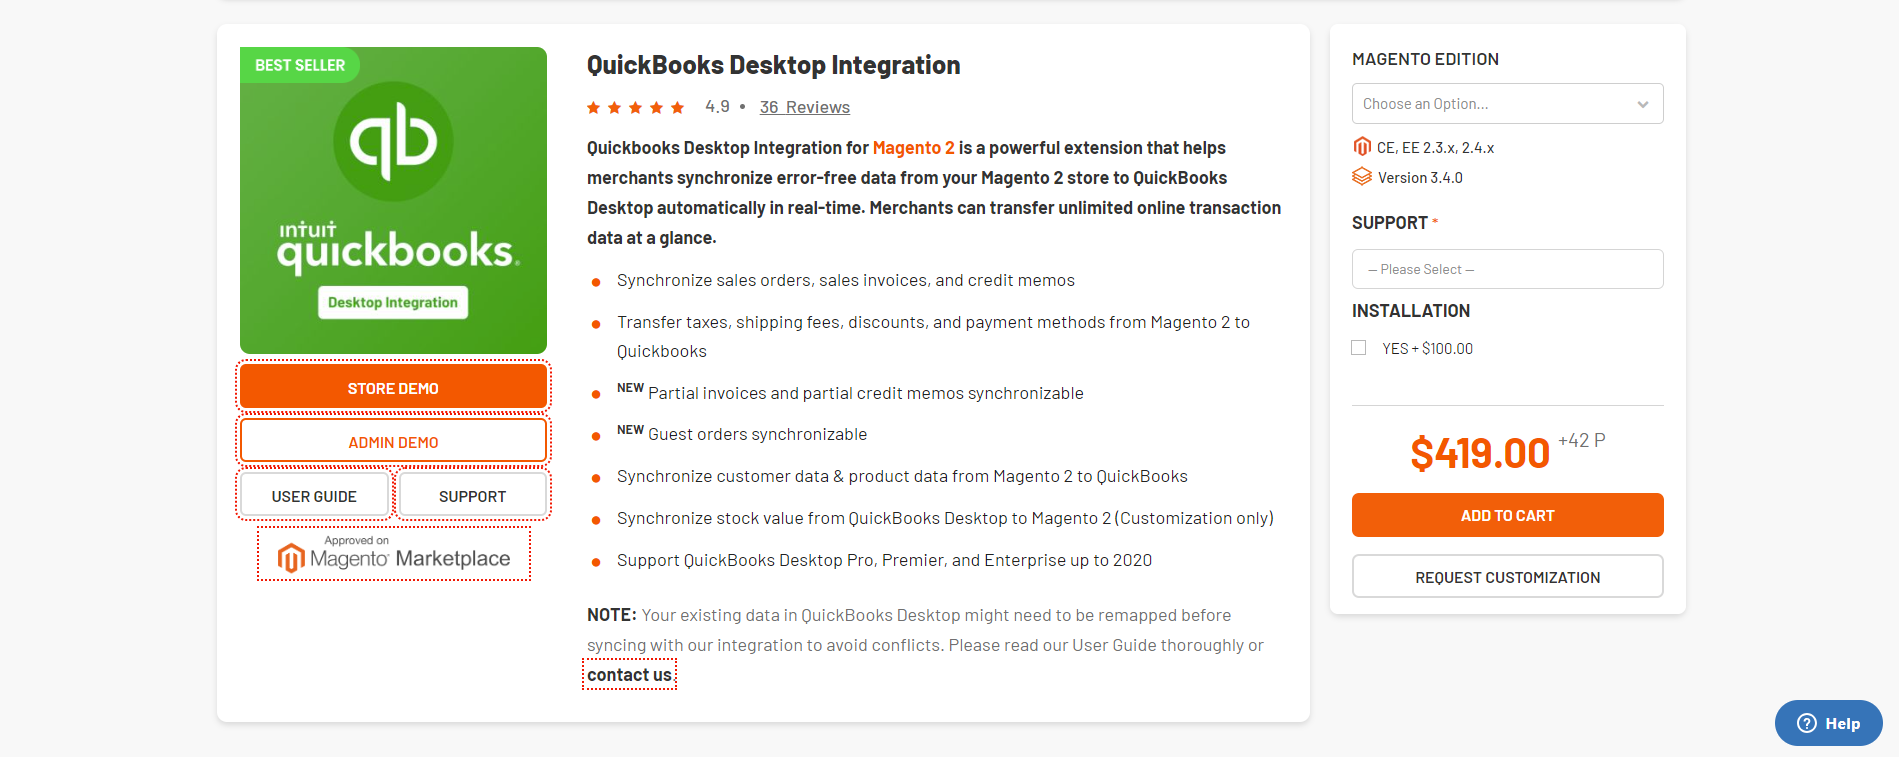 Magenest QuickBooks Desktop Integration